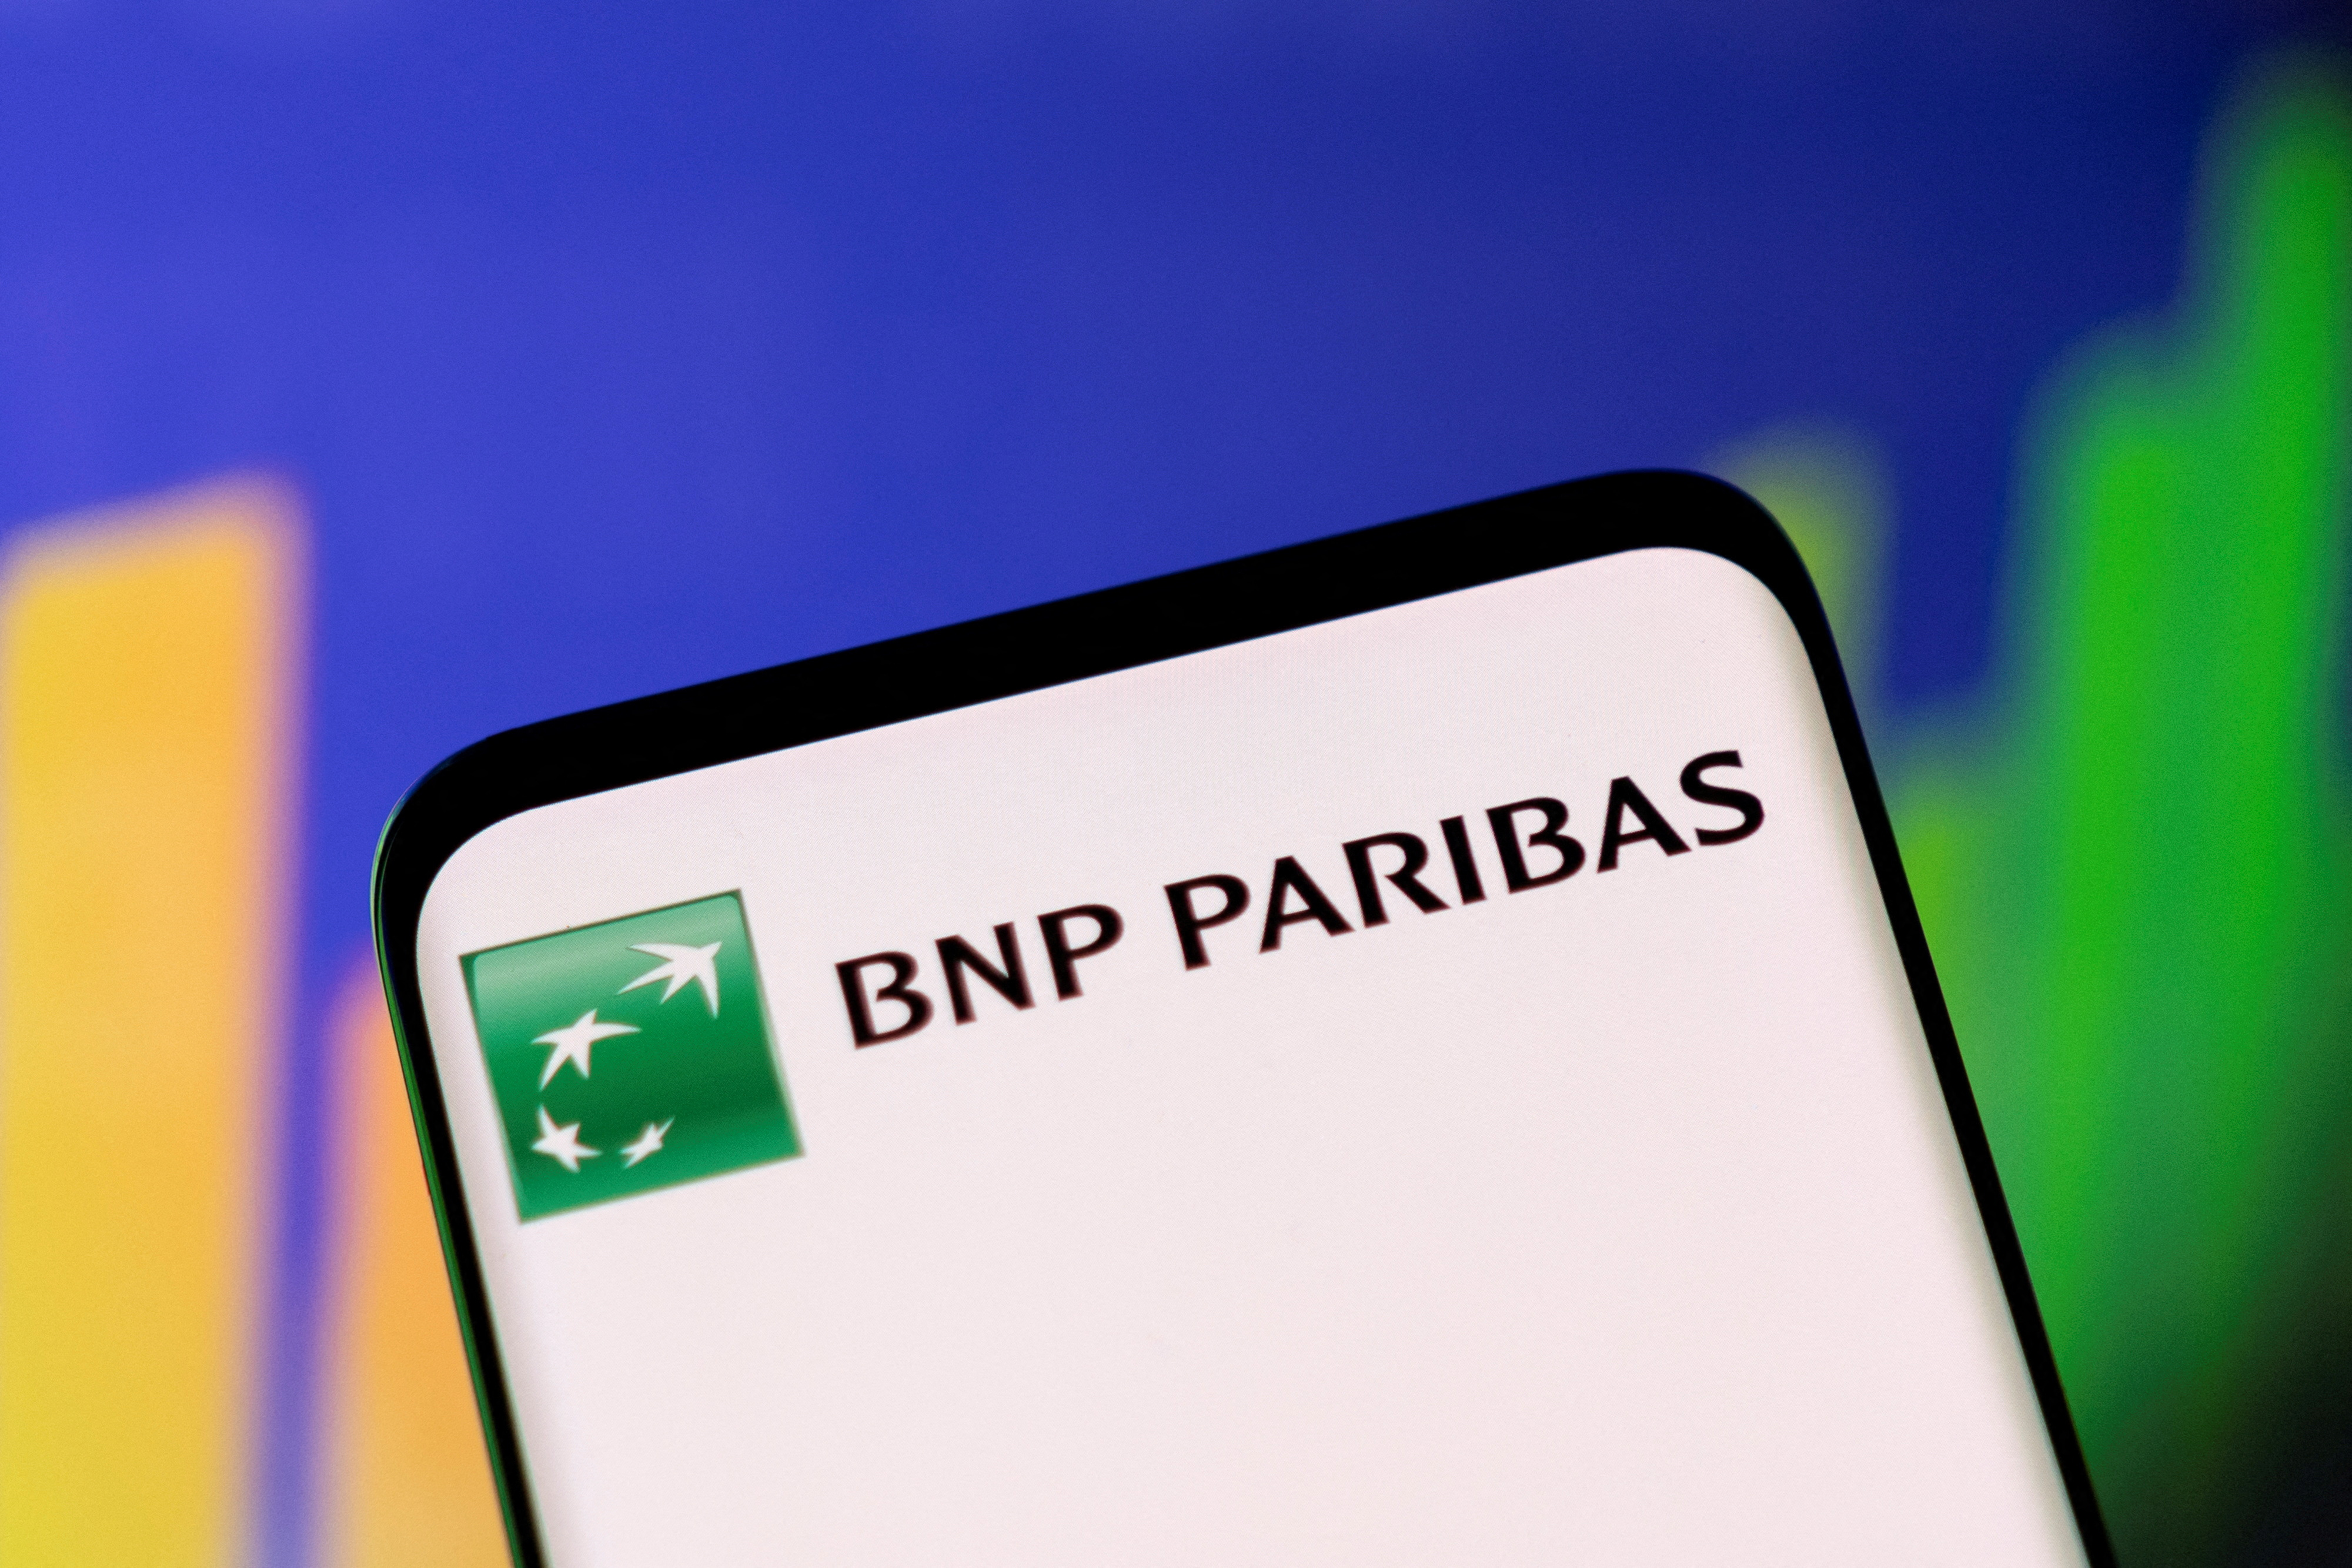 Illustration shows BNP Paribas logo and stock graph